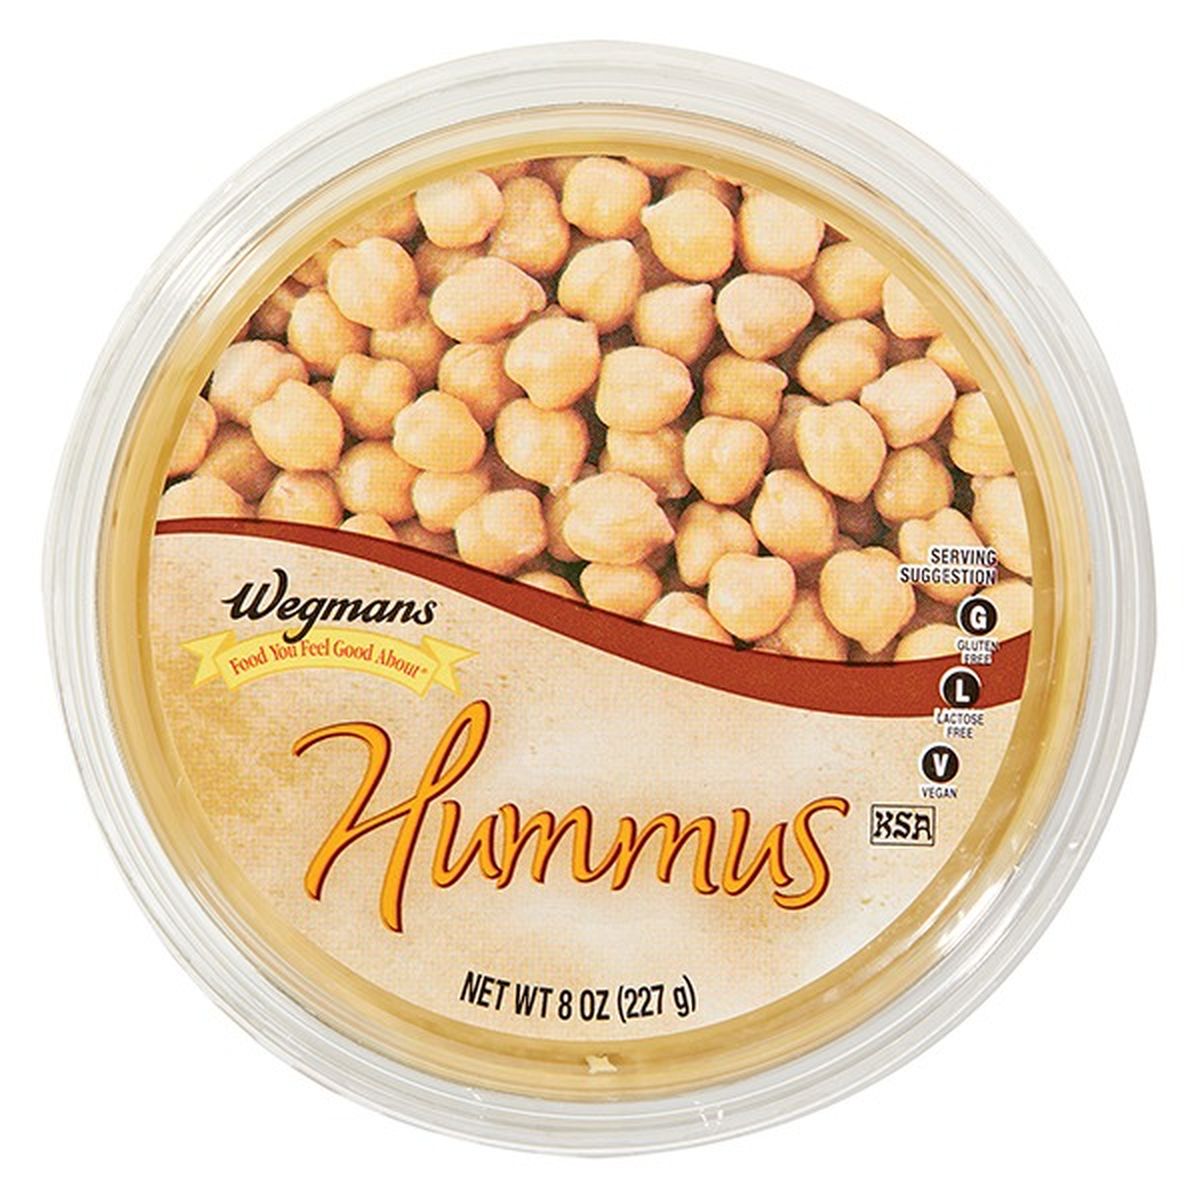 Calories in Wegmans Original Hummus